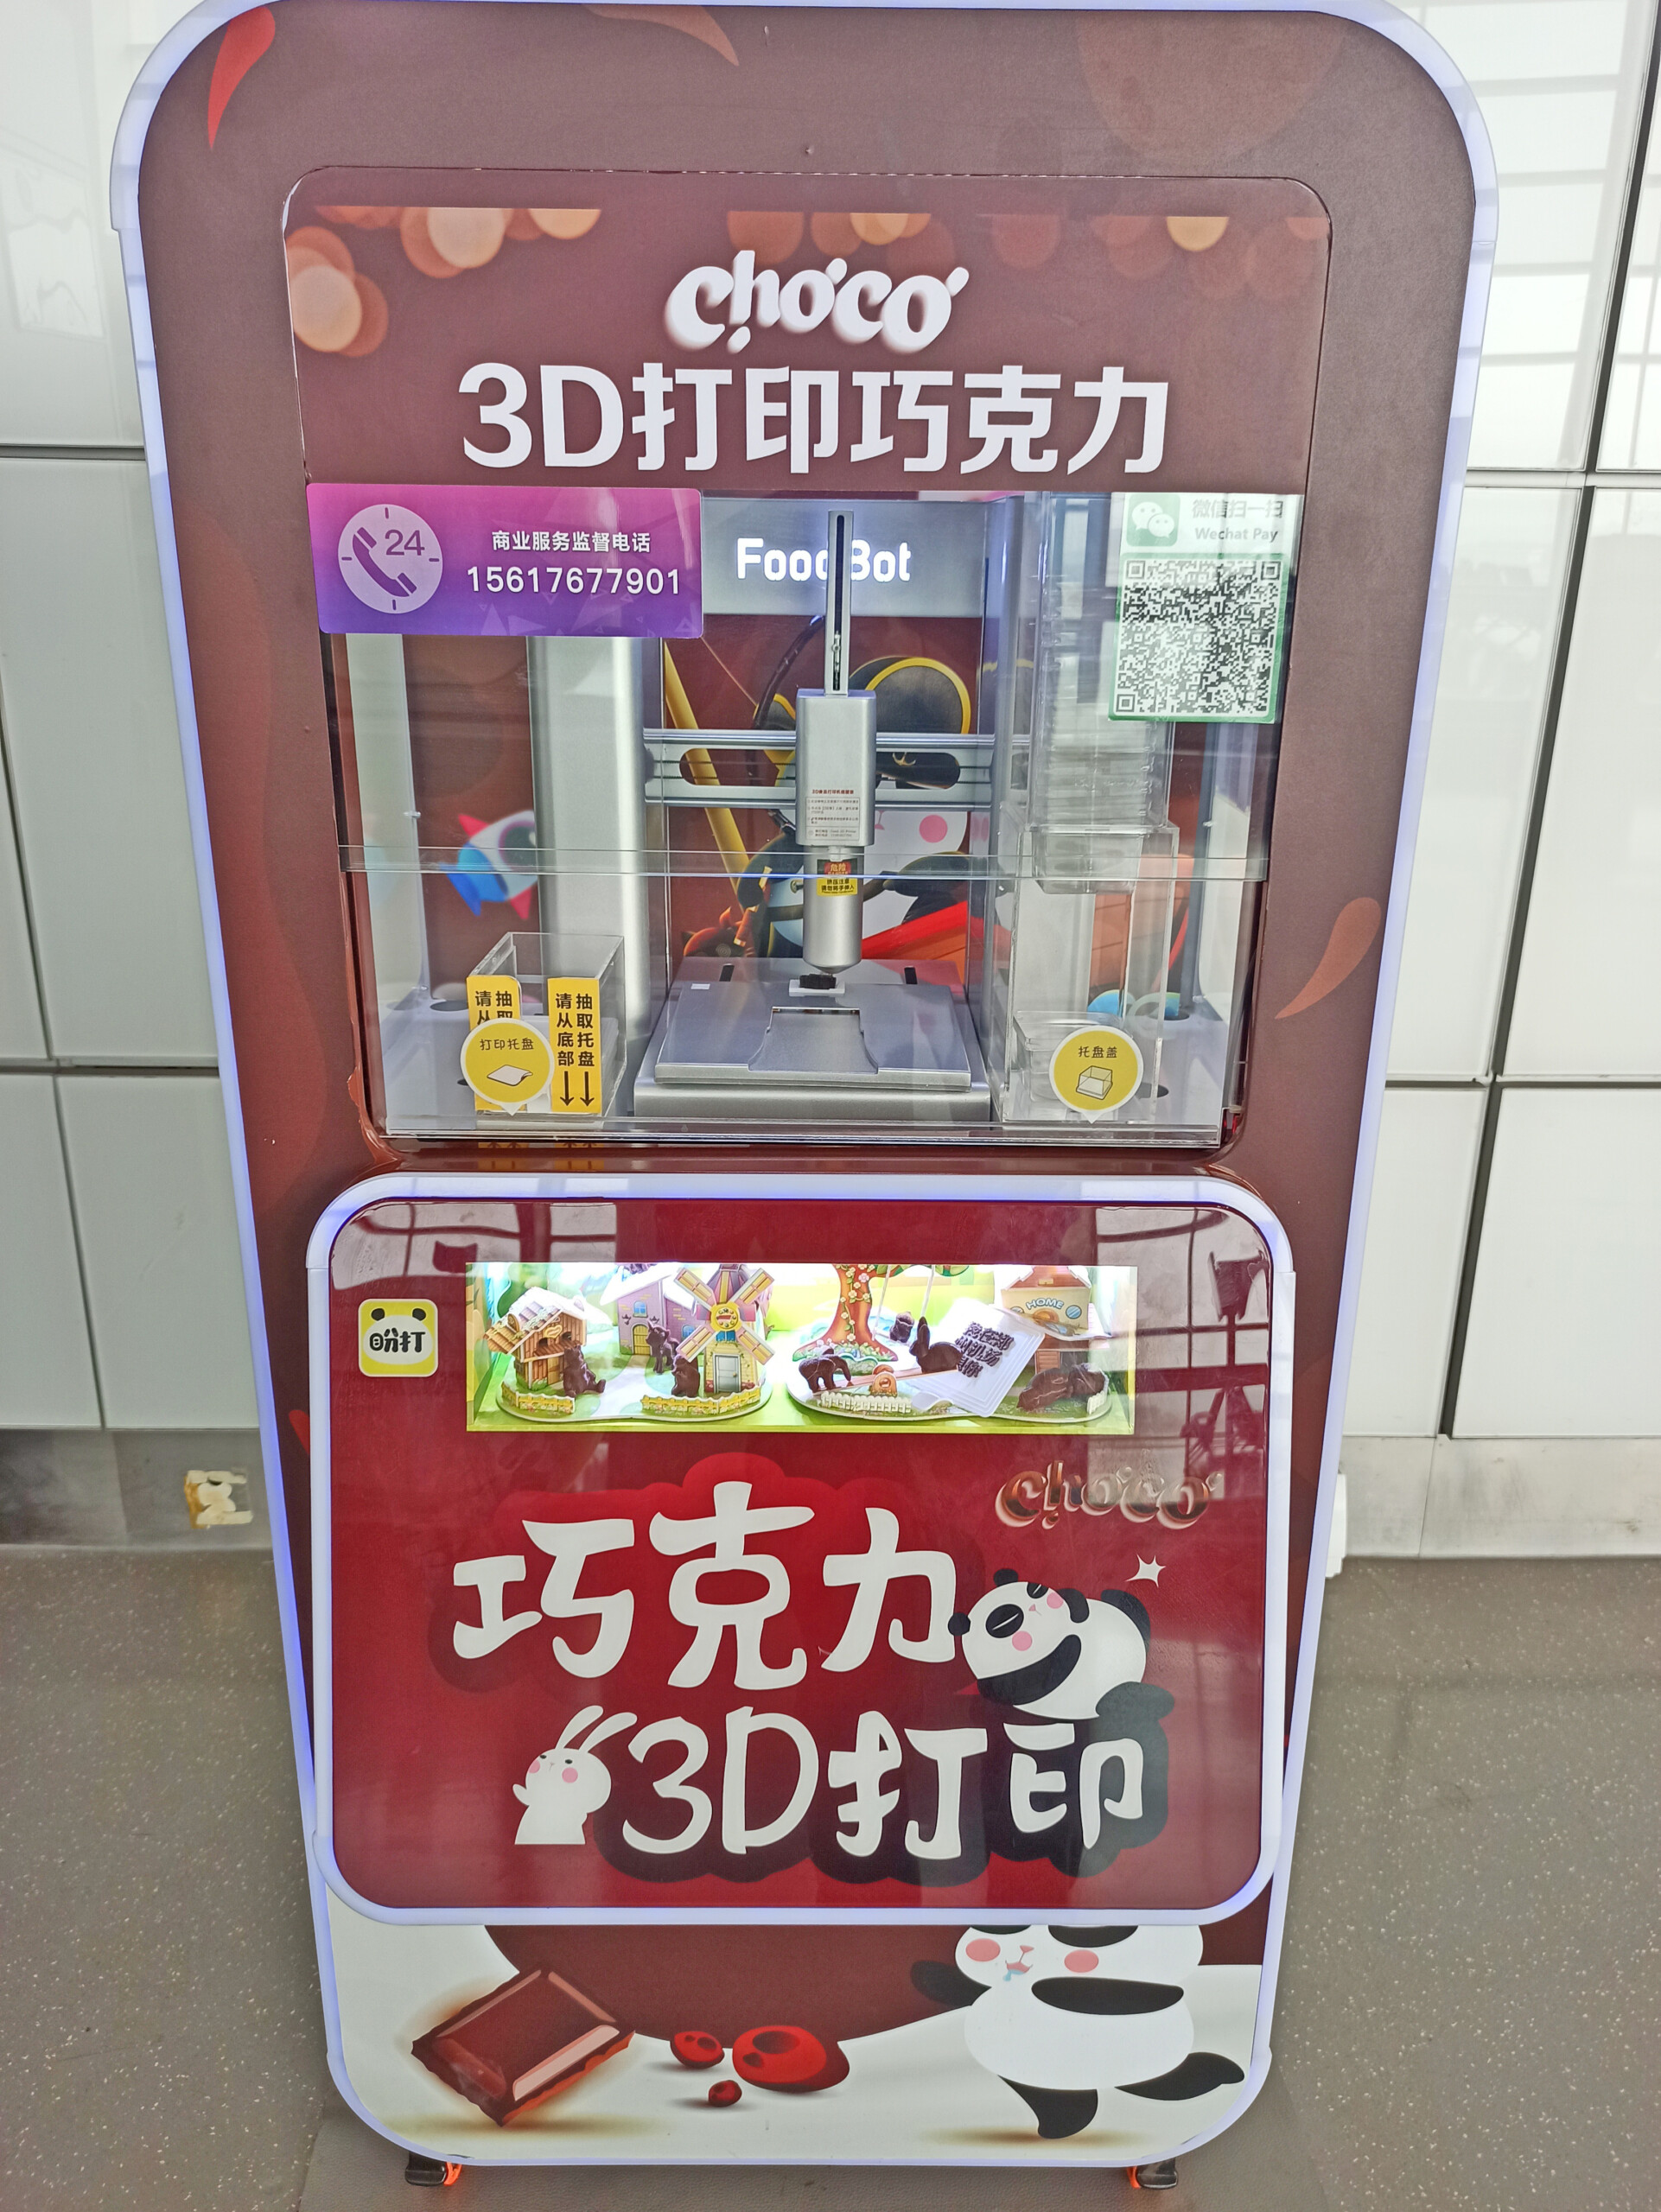 3-D Printed Chocolate Vending Machine